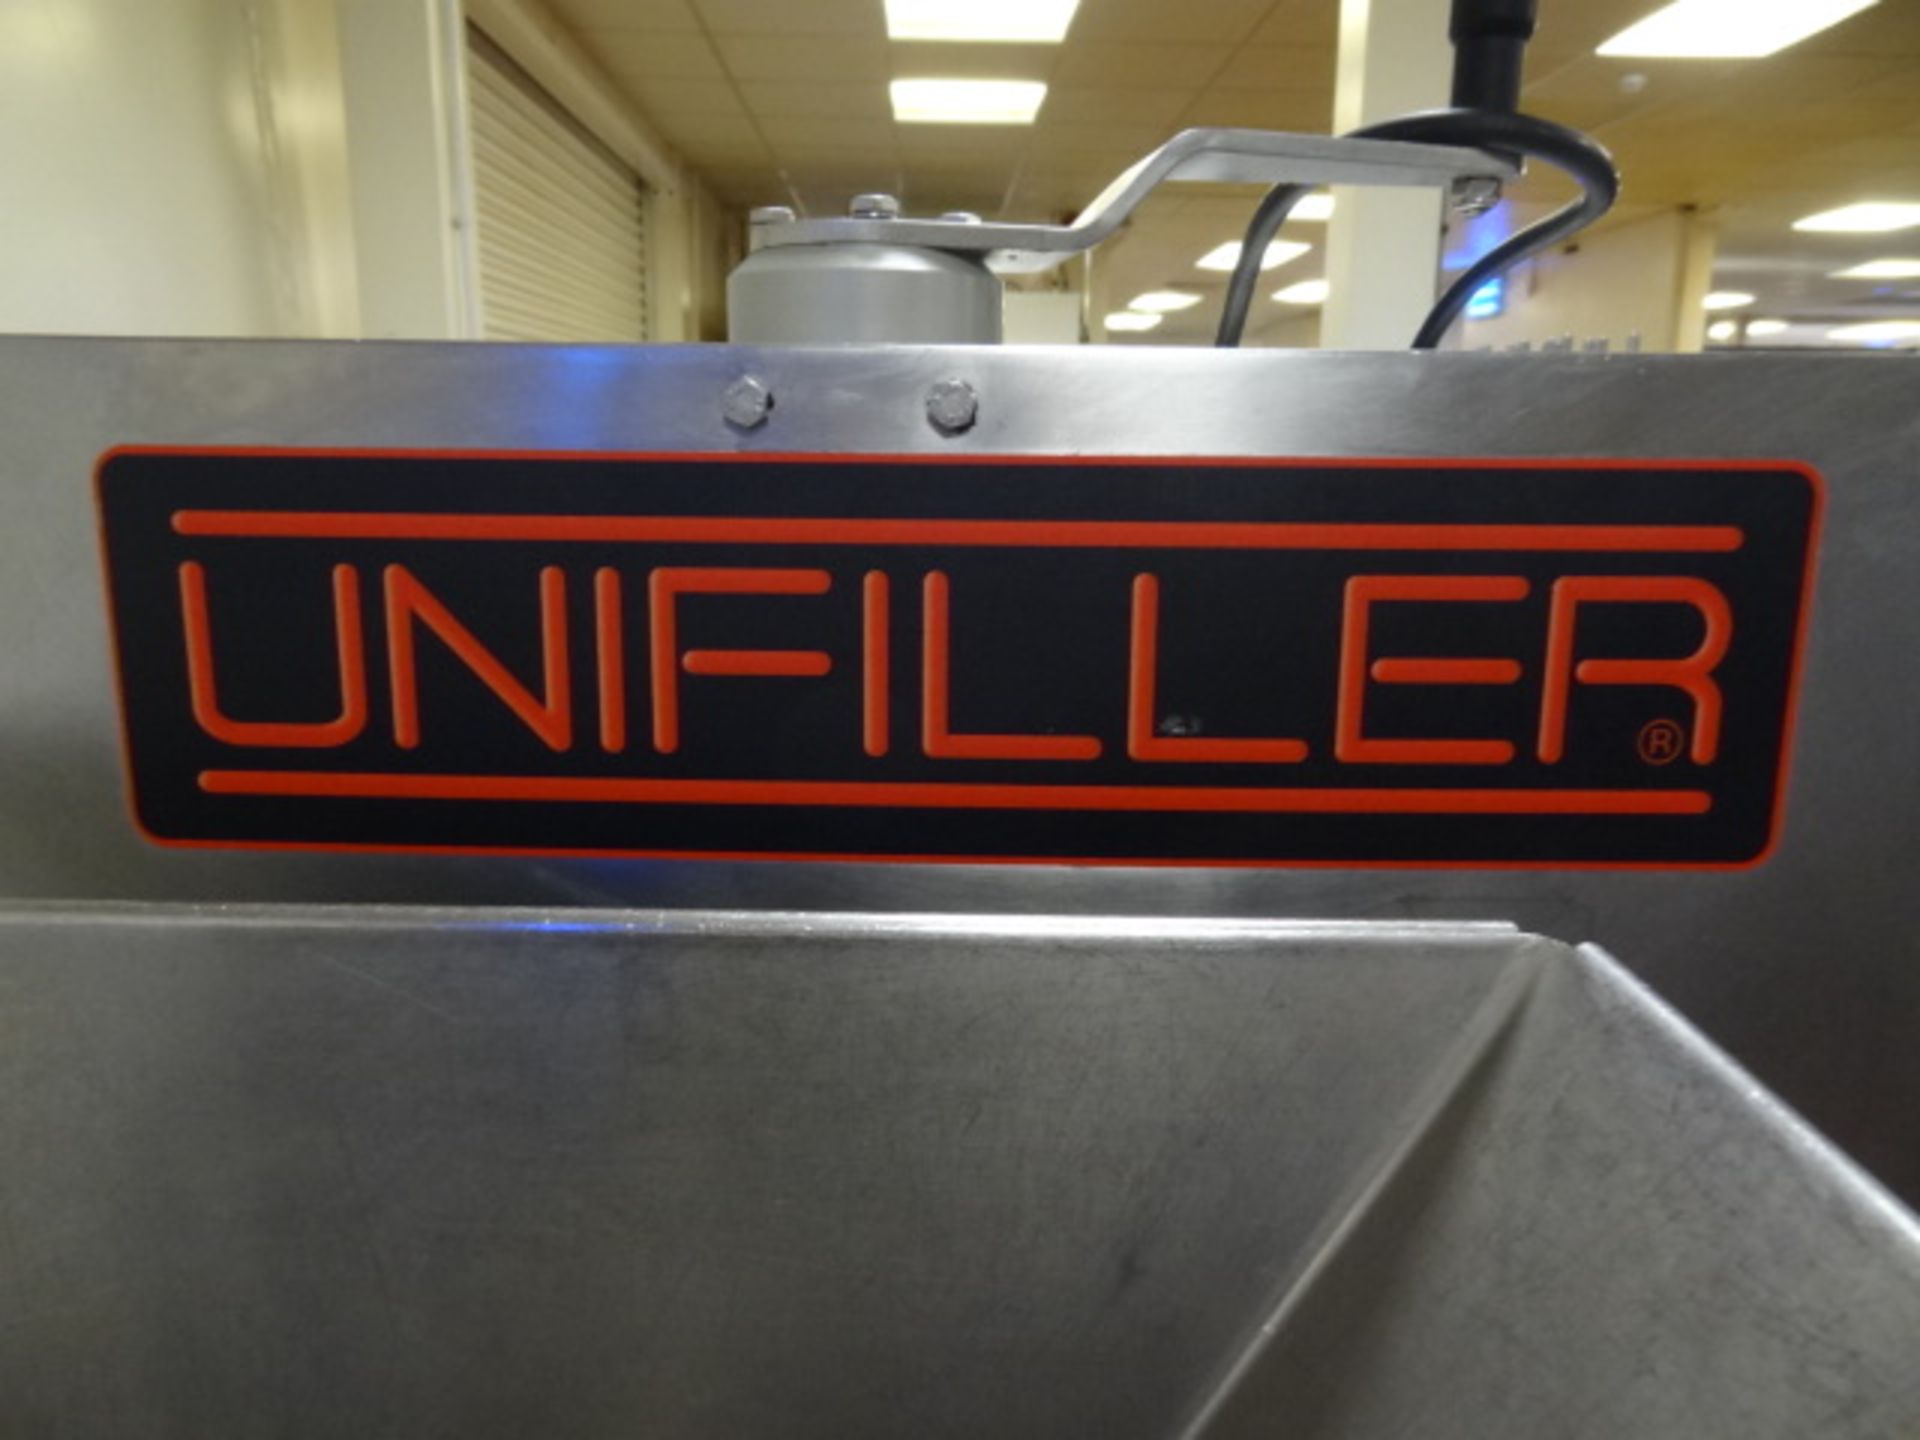 Unifiller Multistation. 6 head depositor - Image 2 of 7